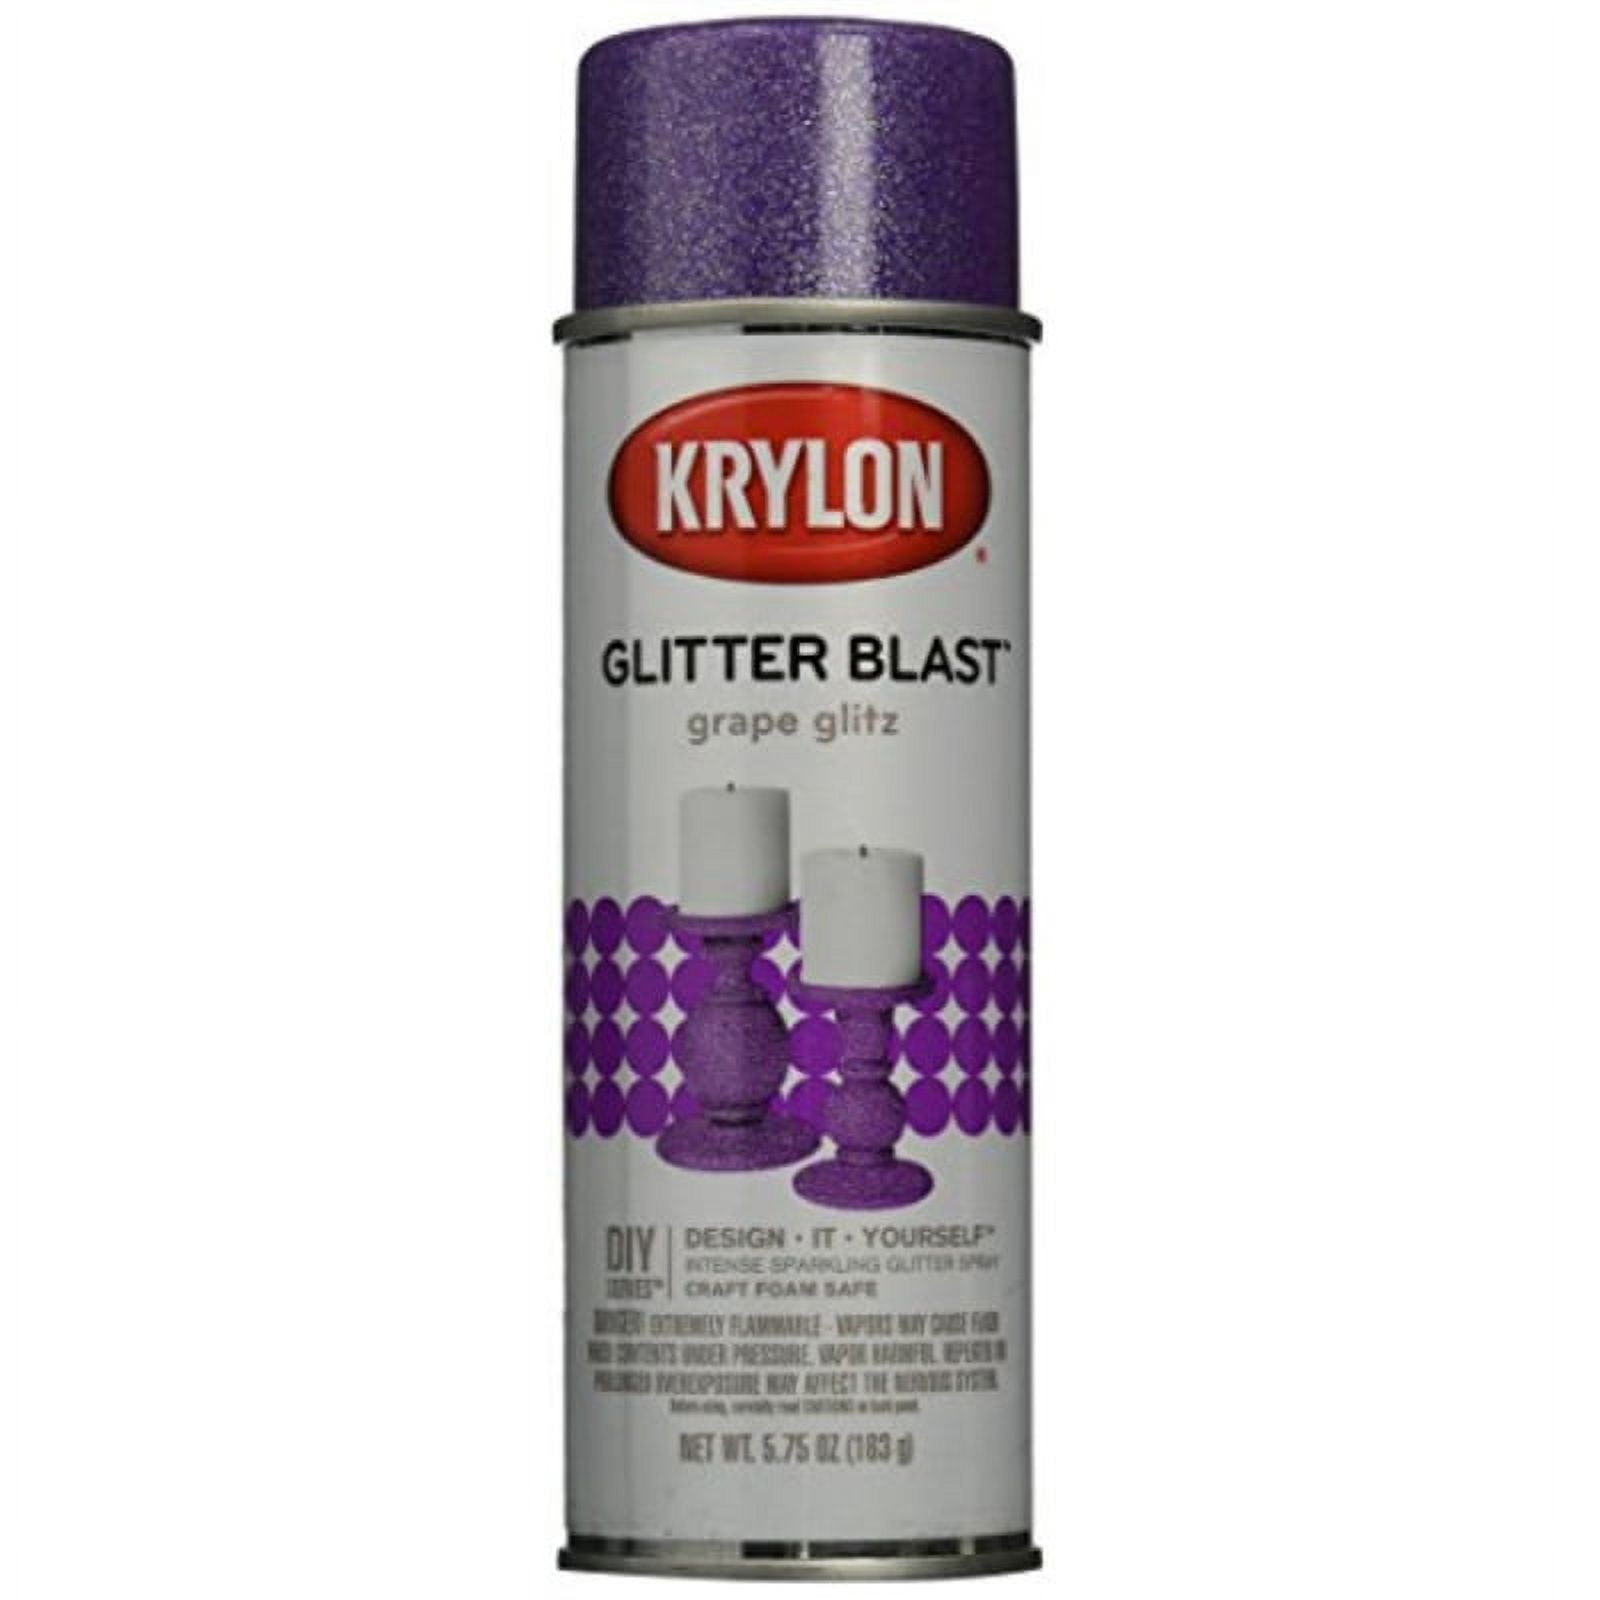 Krylon Glitter Blast ORANGE BURST Glitter Spray Can 5.75oz